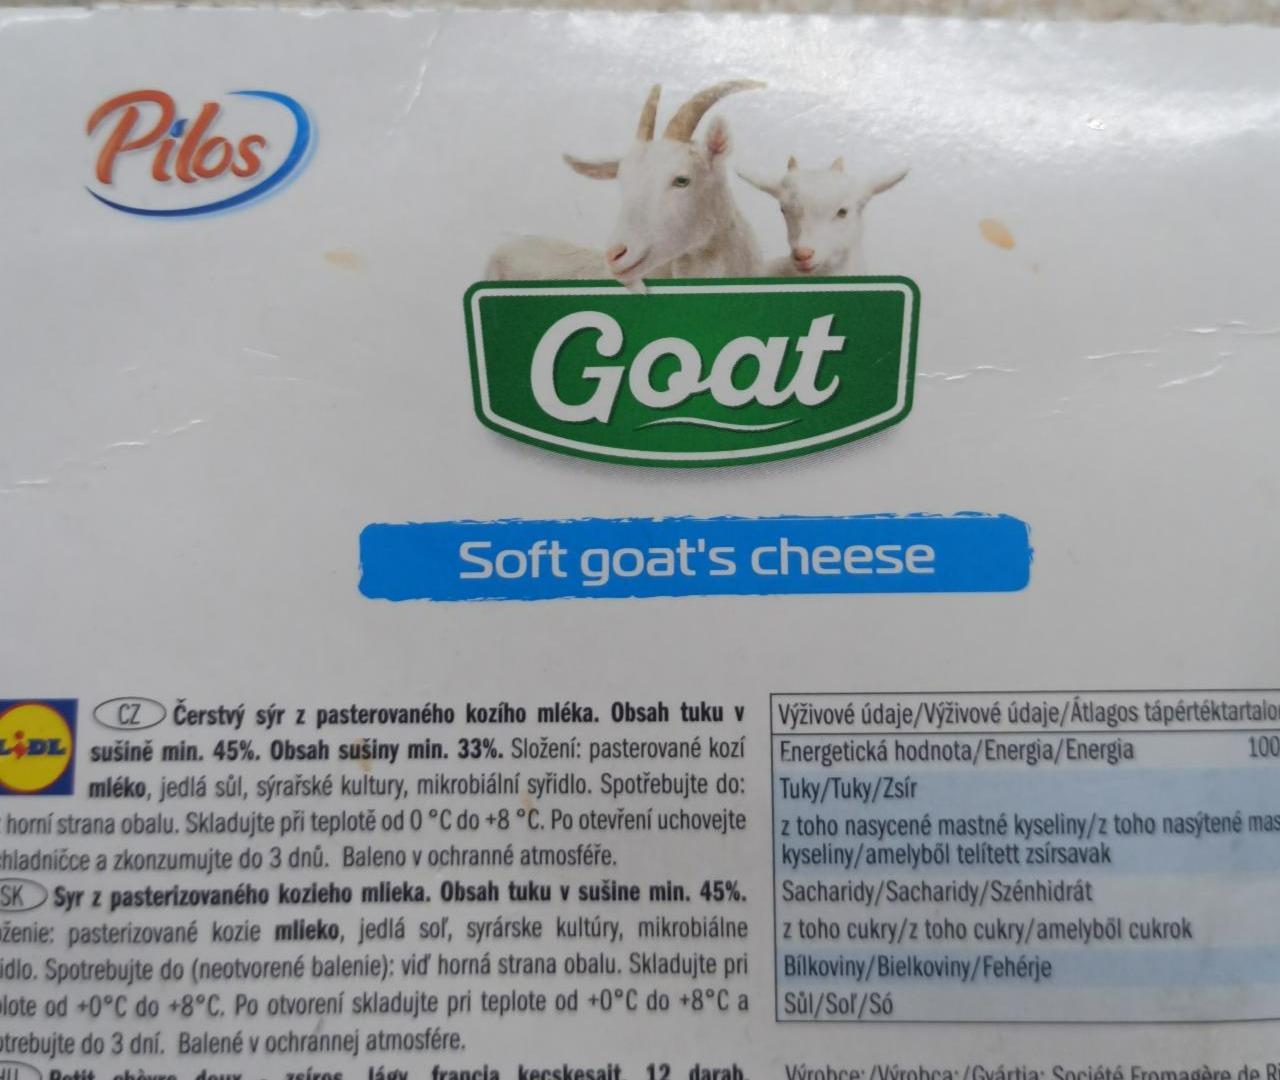 Képek - Soft goat cheese Pilos